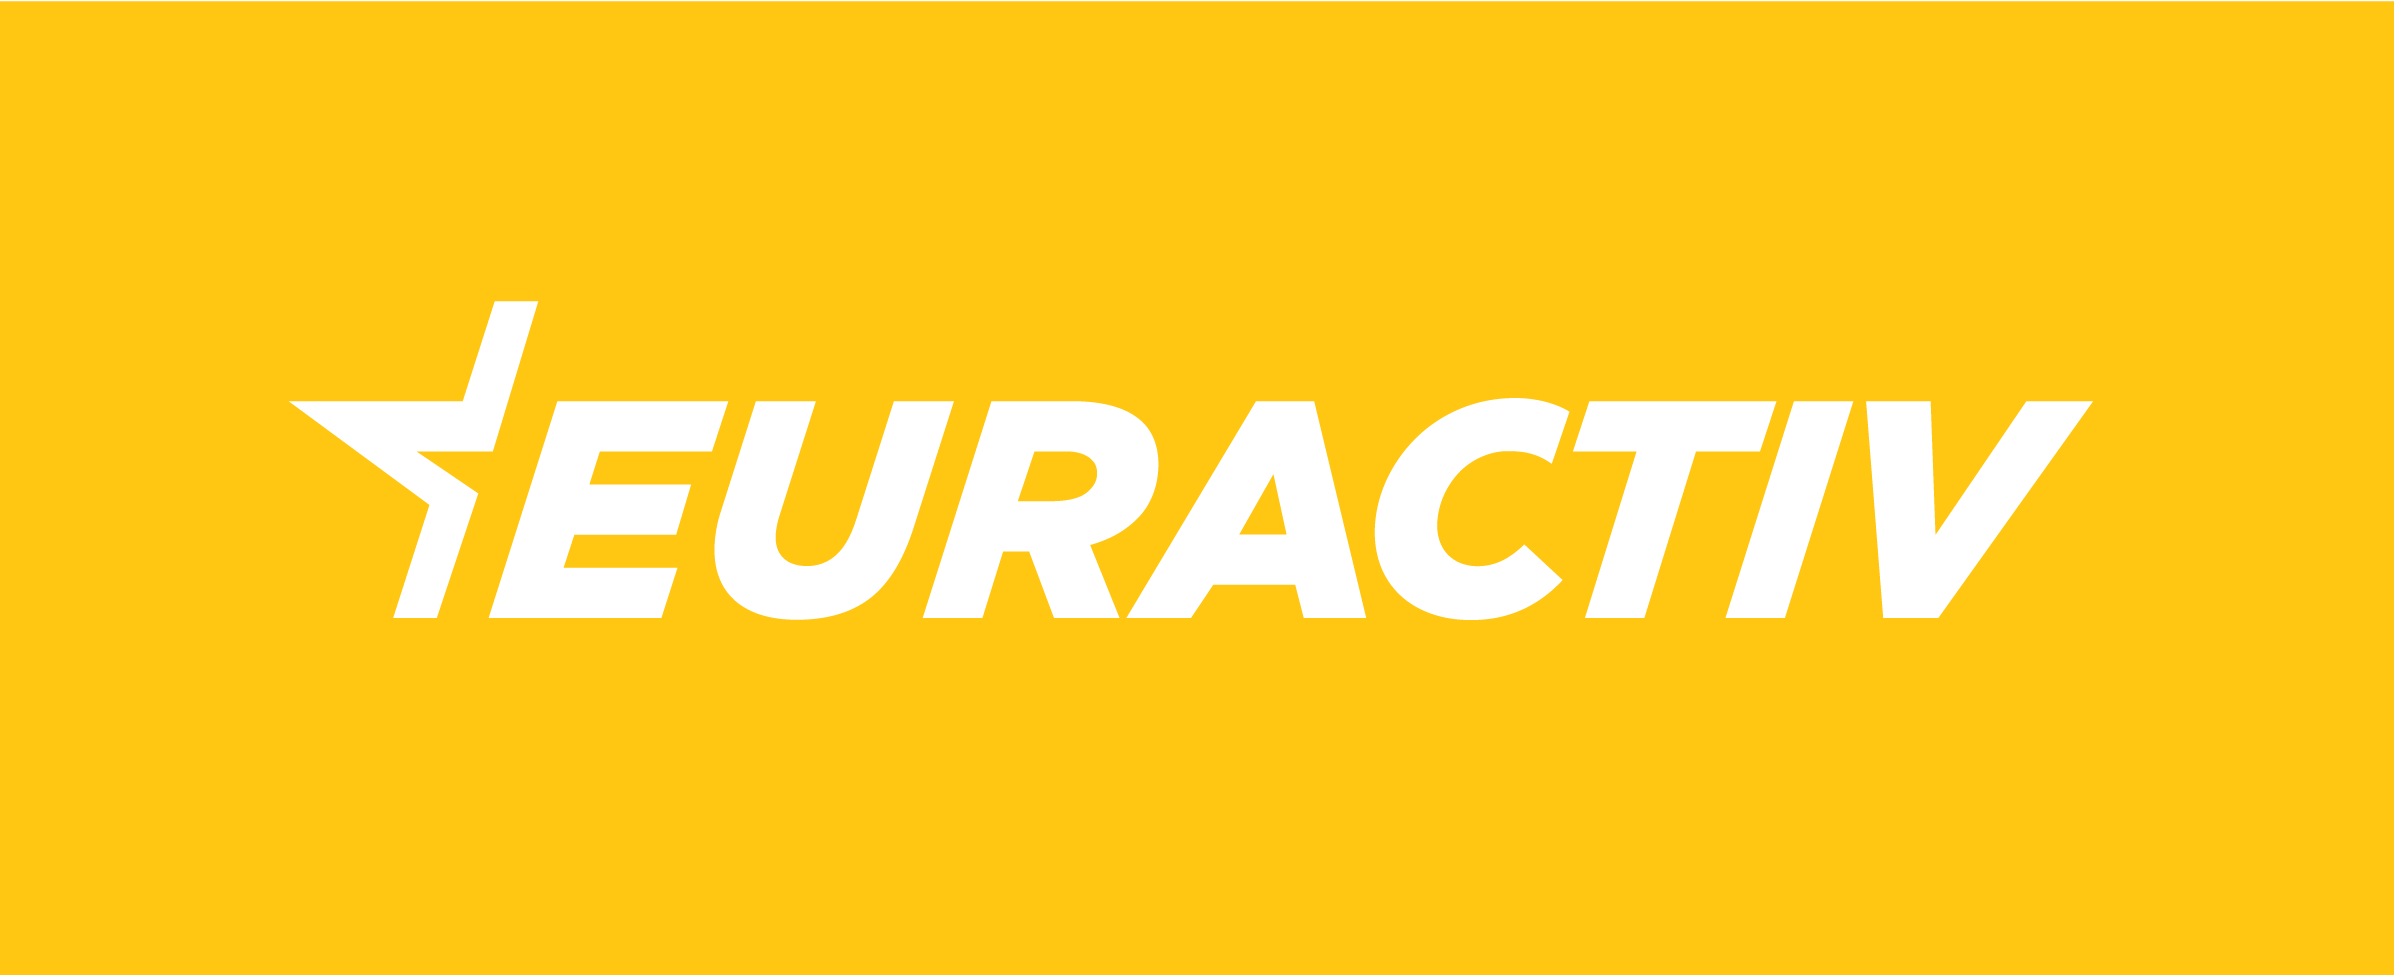 Euractiv logo